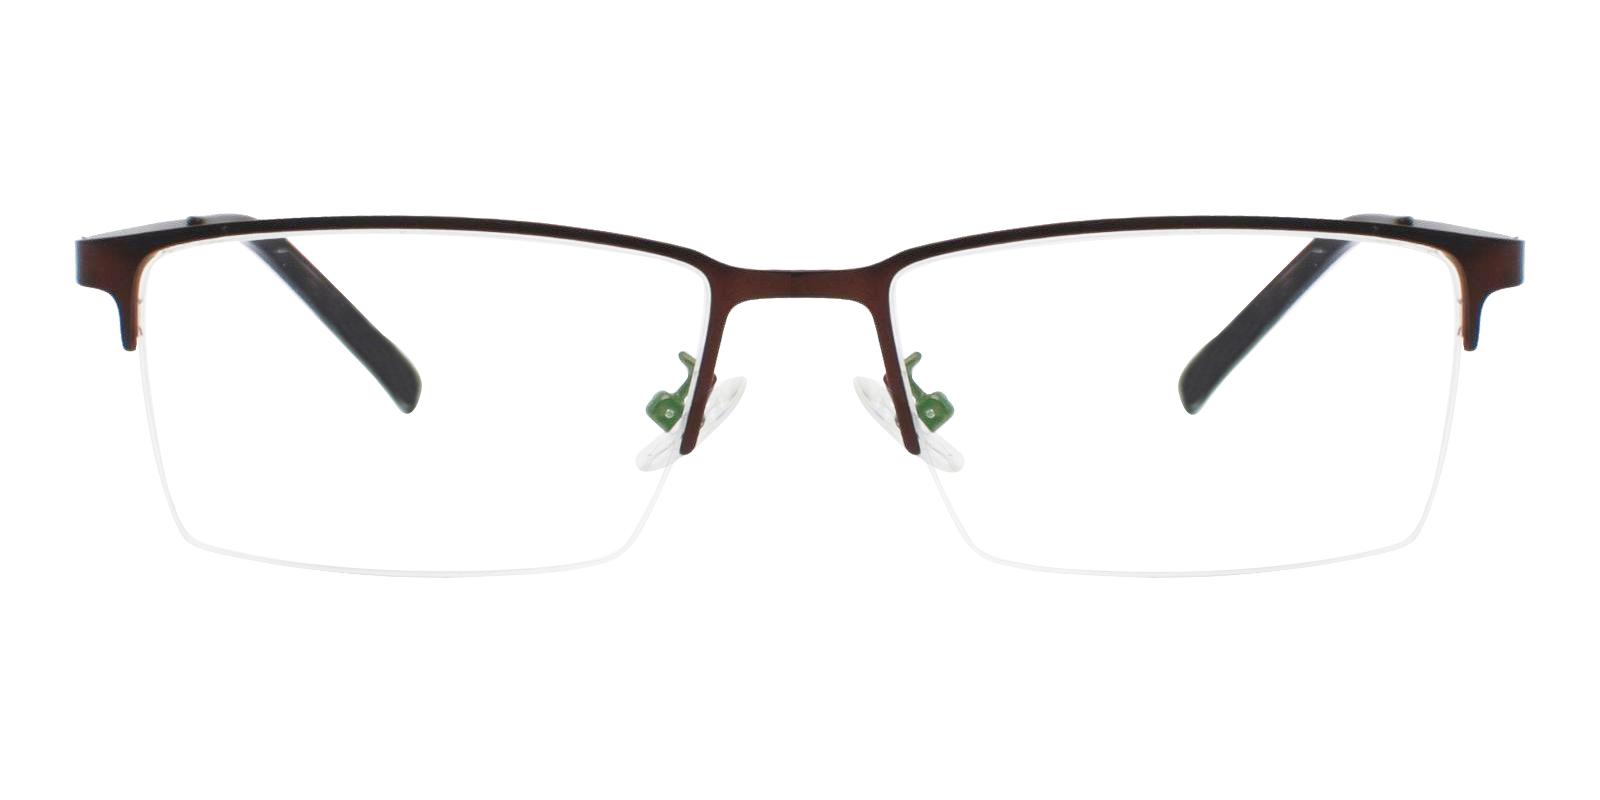 Alexander Brown Metal Eyeglasses , NosePads Frames from ABBE Glasses